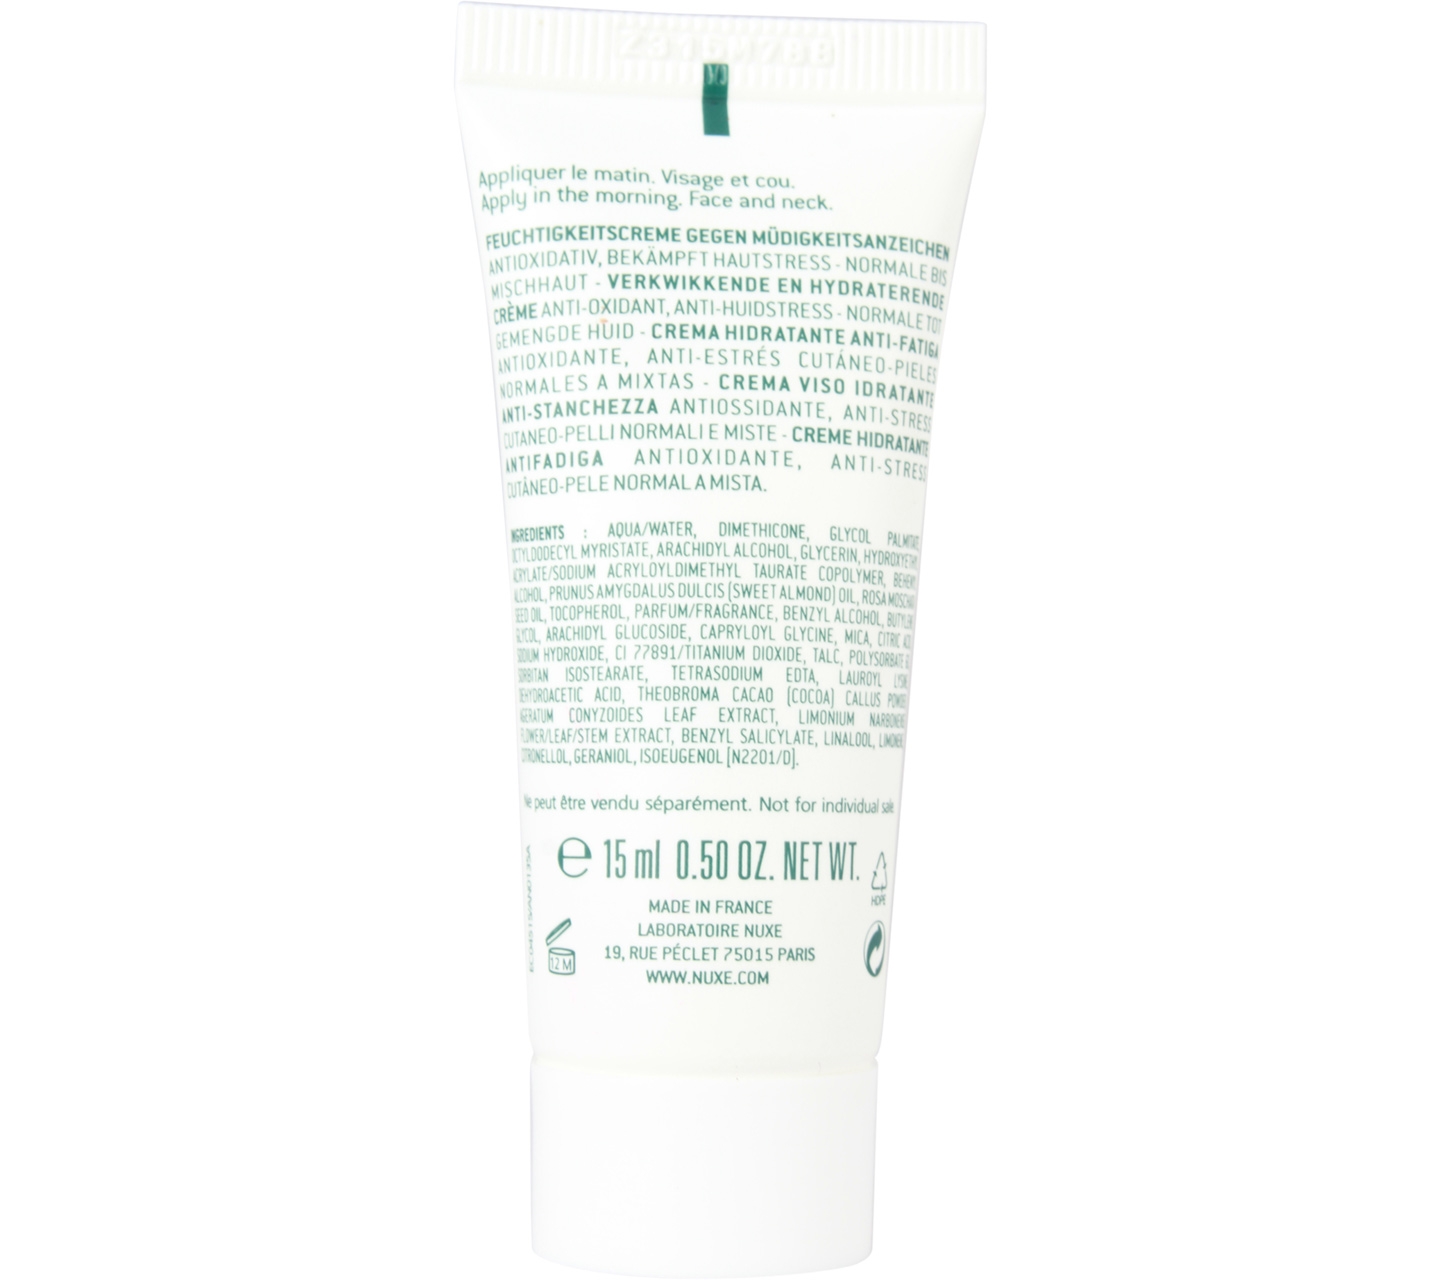 Nuxe Creme Prodigieuse Anti-Fatigue Moisturising Cream Skin Care